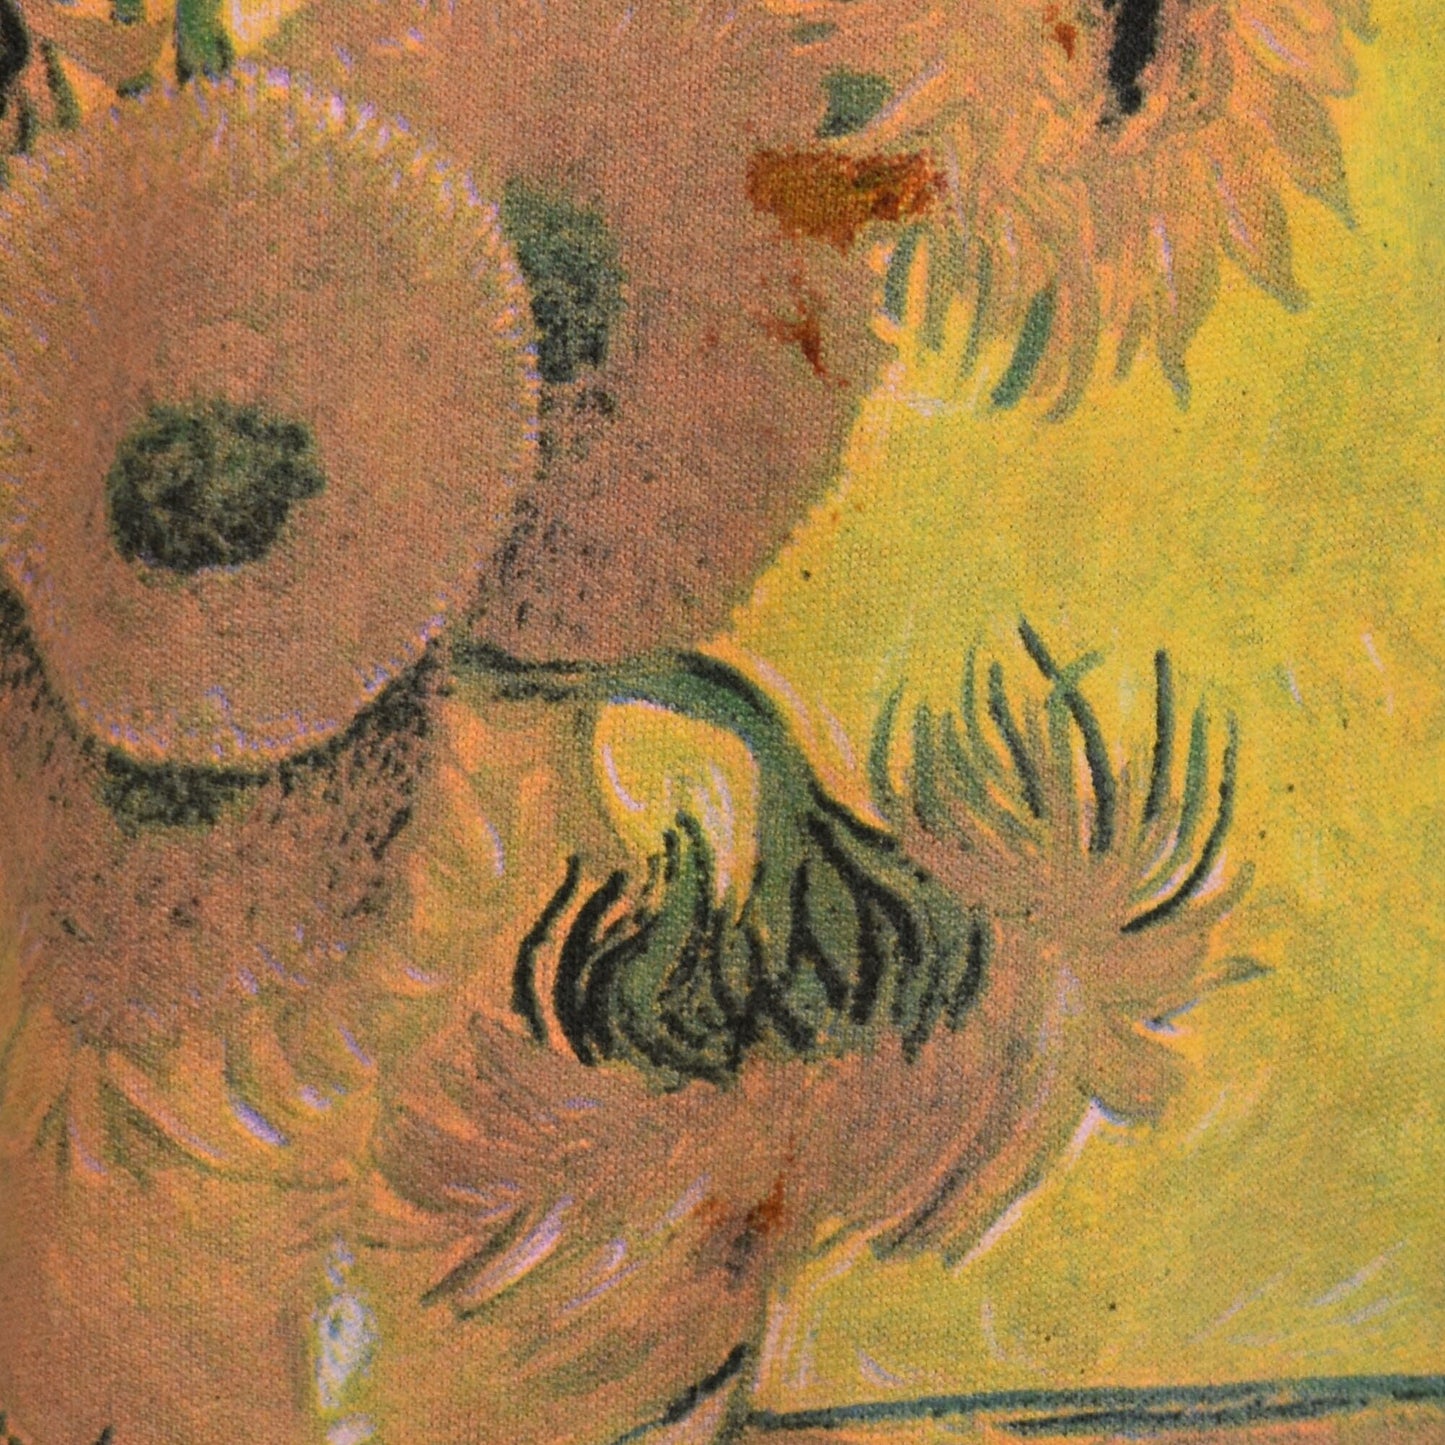 Vintage 1991 Van Gogh "Sunflowers" Printed 100% Tee by Ralph Marlin- Size M